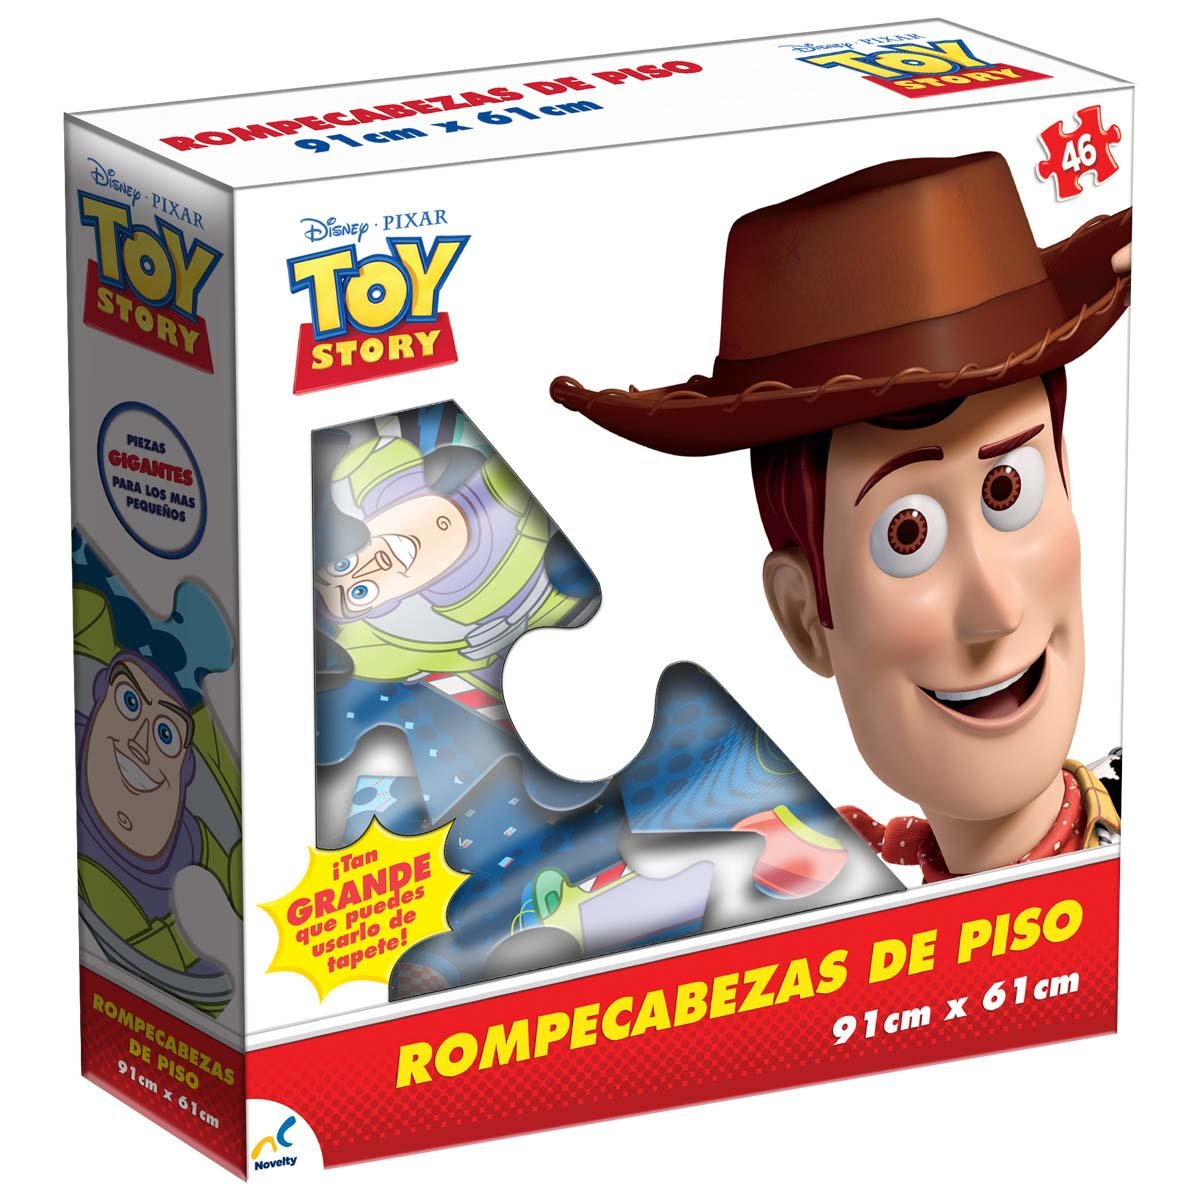 Toy Story - Rompecabezas de Piso